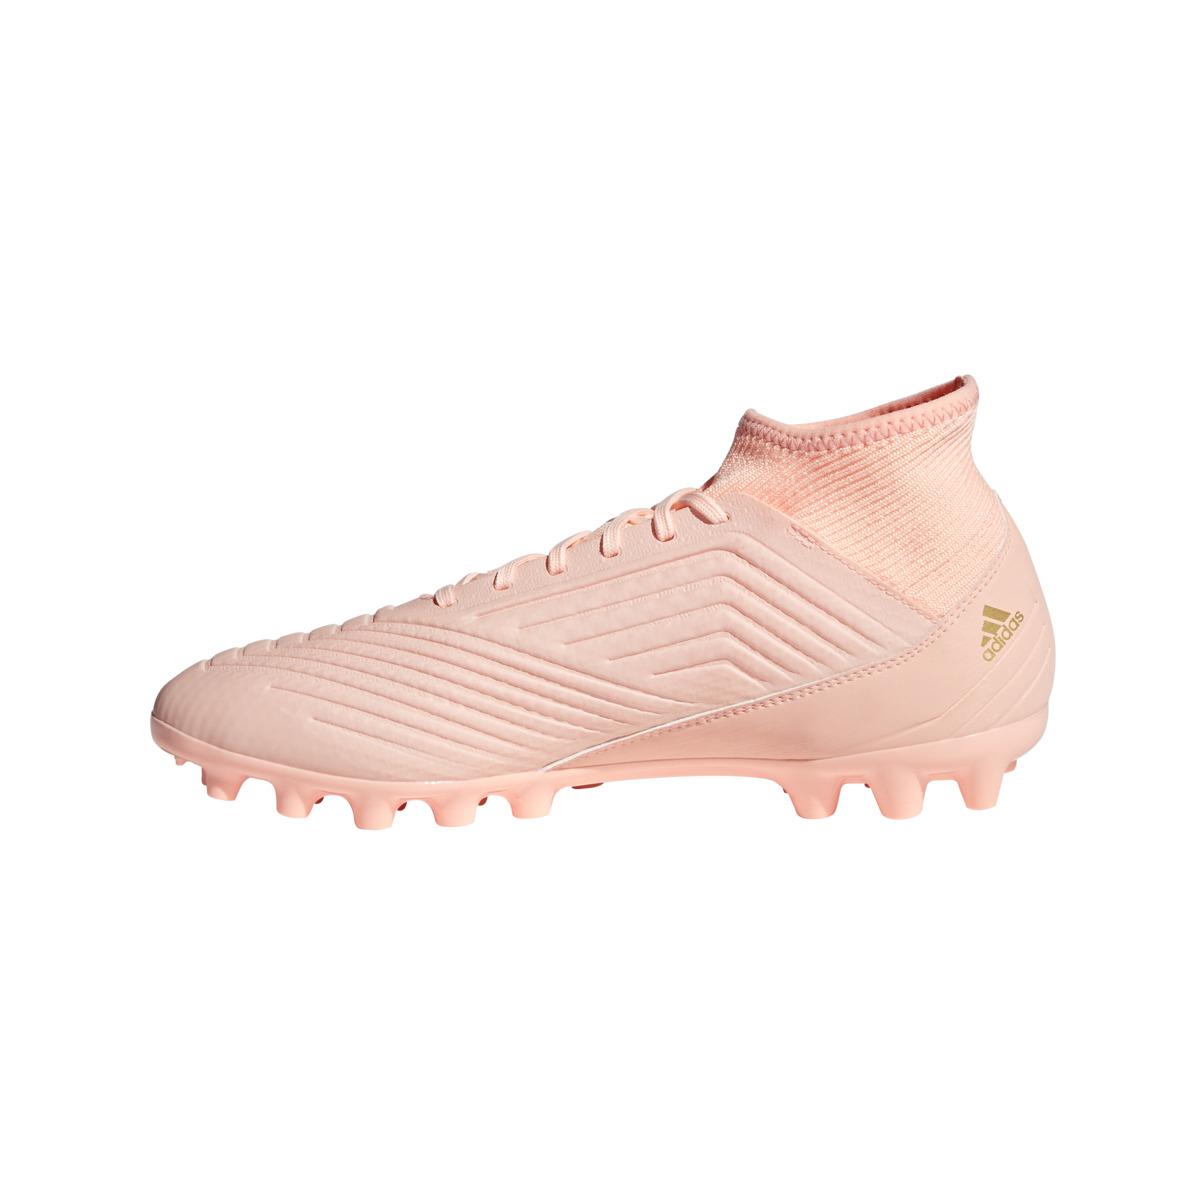 adidas salmon pink football boots Off 64% - www.sbs-turkey.com